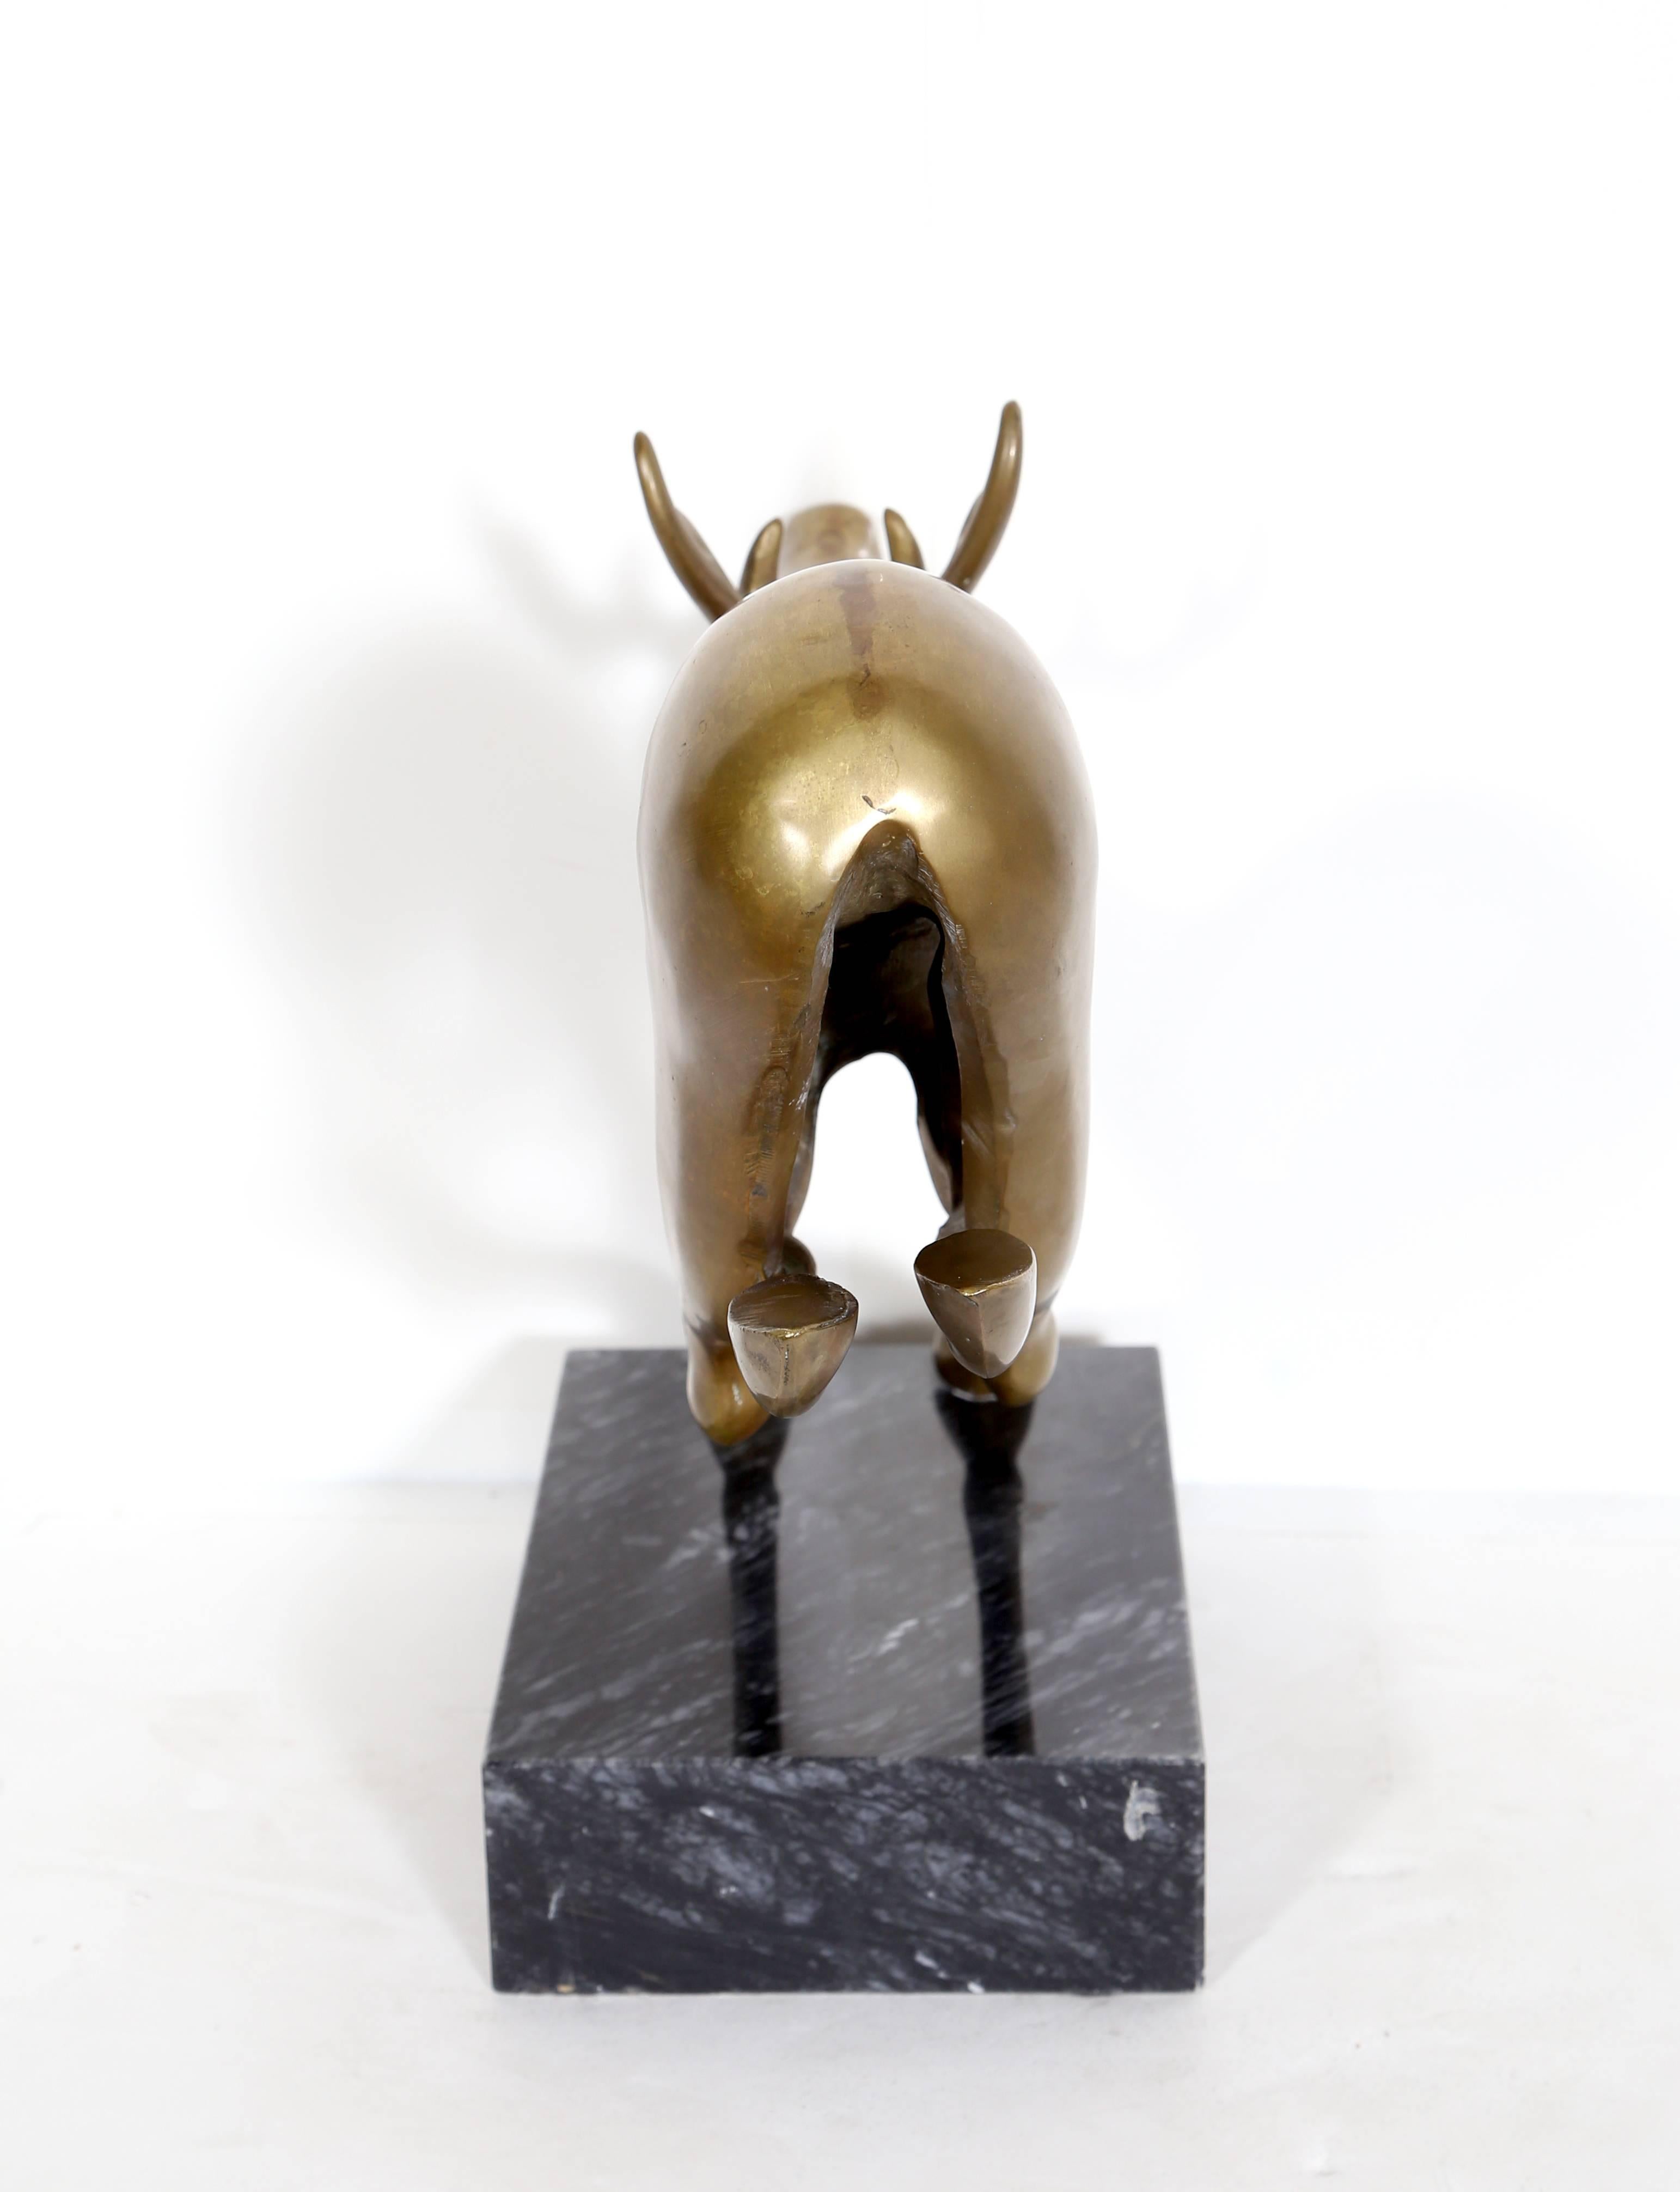 Artist: Mattakitkosol Somchai
Title: Gold Reindeer
Year: Circa 1970
Medium: Bronze Sculpture mounted on Marble Base
Size: 10.5  x 15.5  x 4 in. (26.67  x 39.37  x 10.16 cm)
Base: 9 x 6 x 2.25 inches